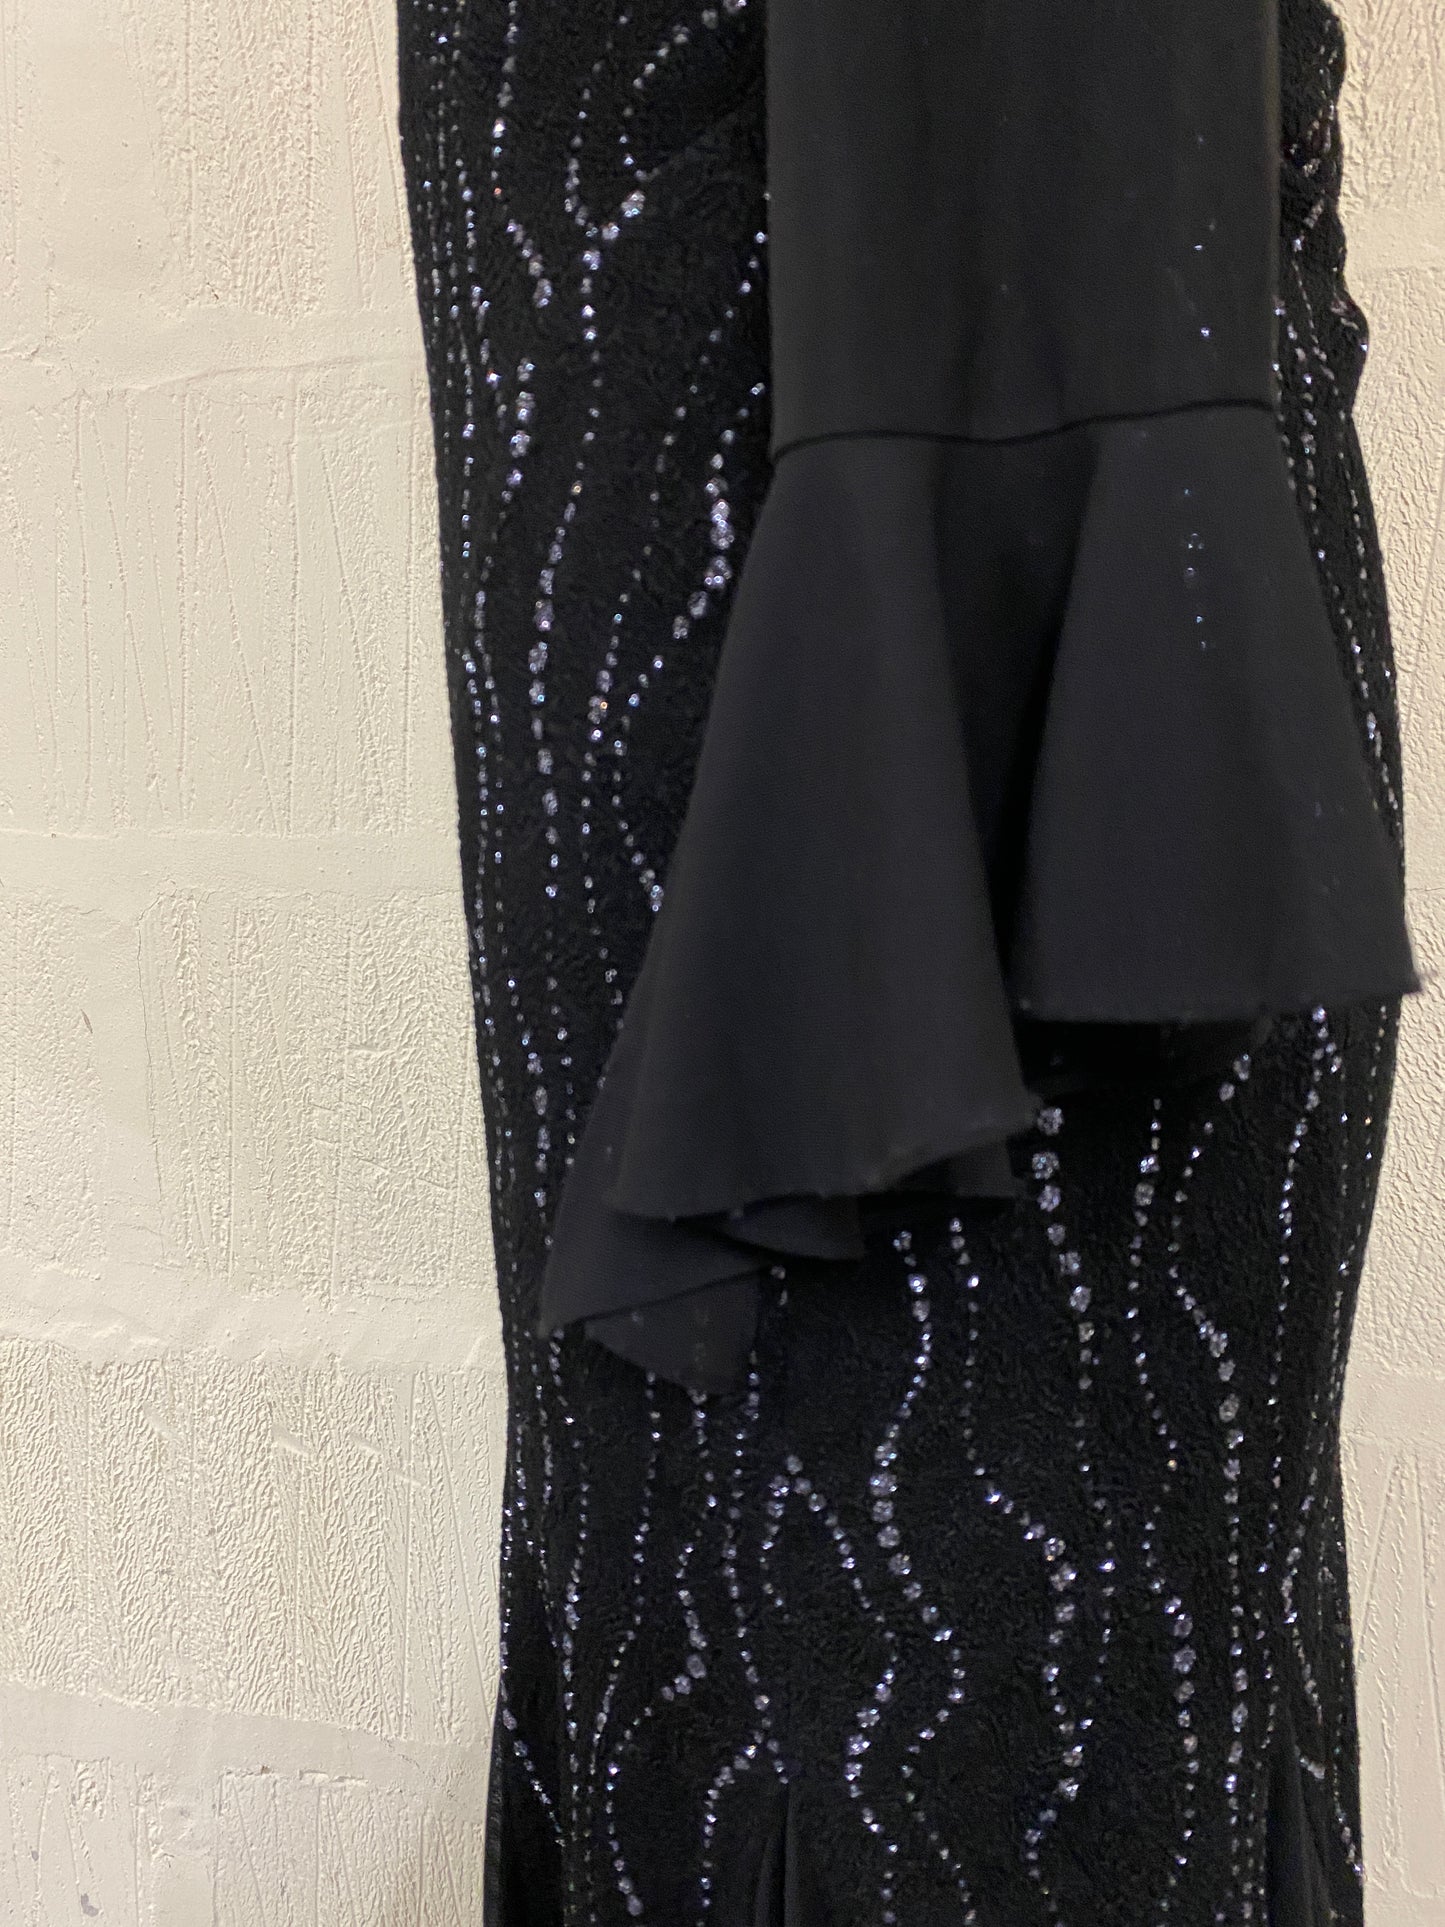 Vintage Black Evening Gown Size 8-10